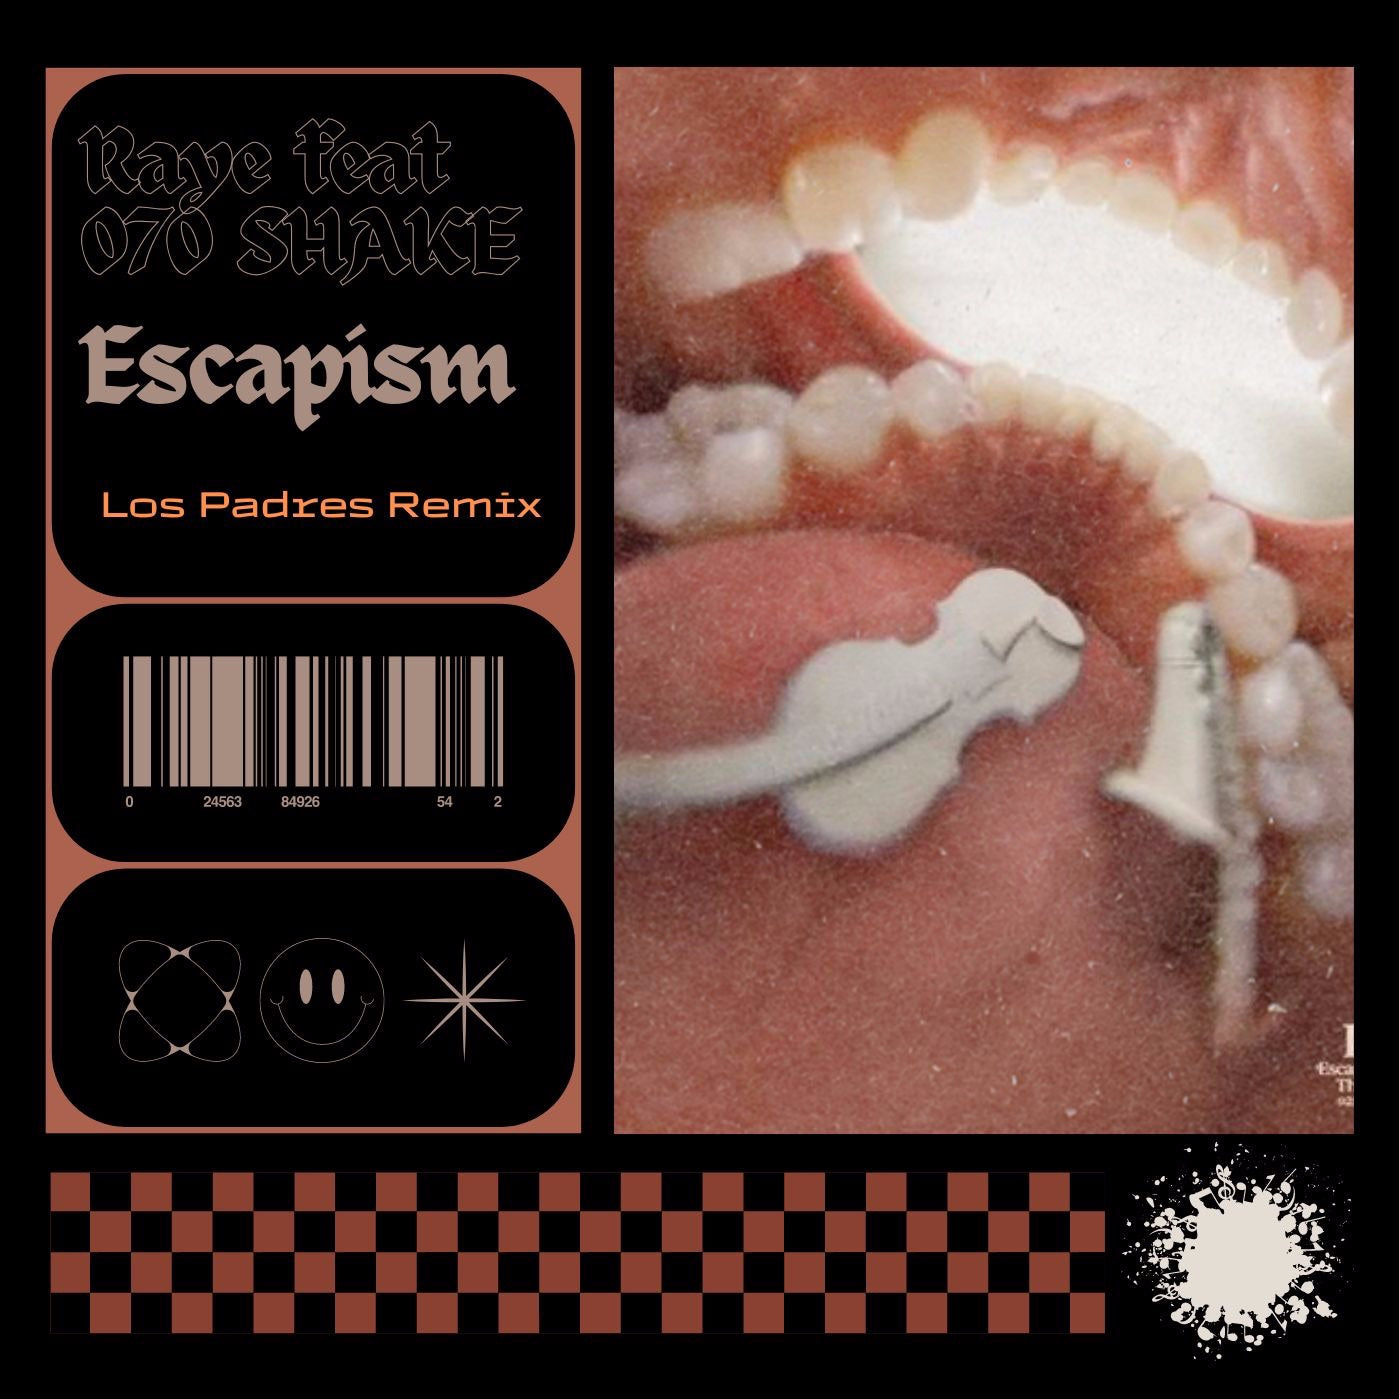 RAYE Ft. 070 Snake - Escapism (Los Padres Remix)